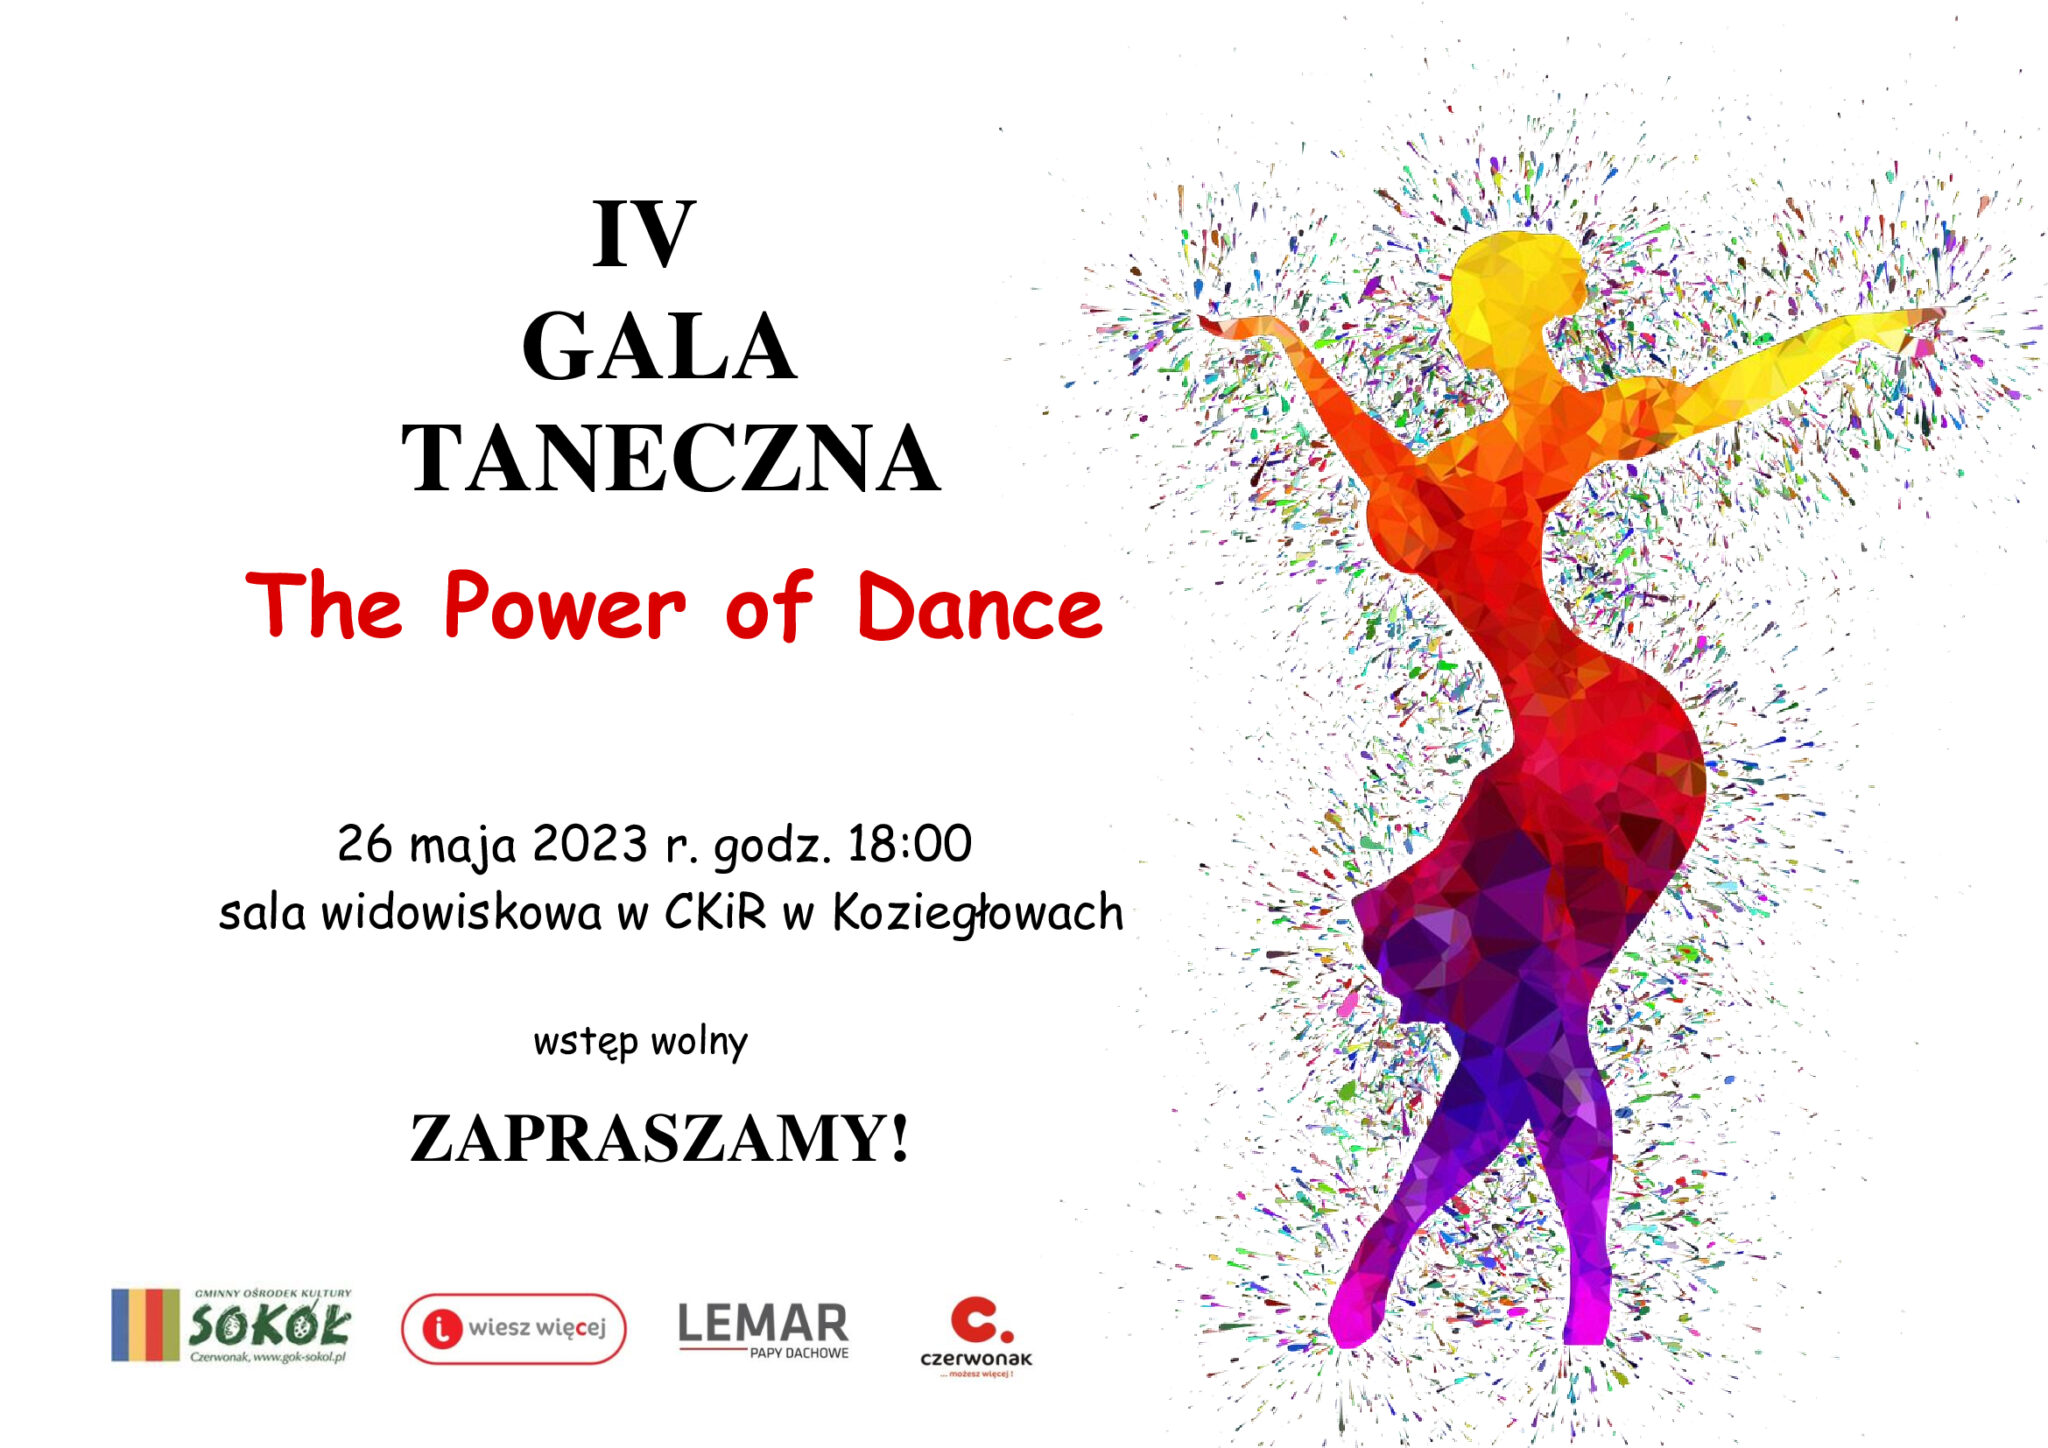 IV Gala Taneczna – The Power of Dance